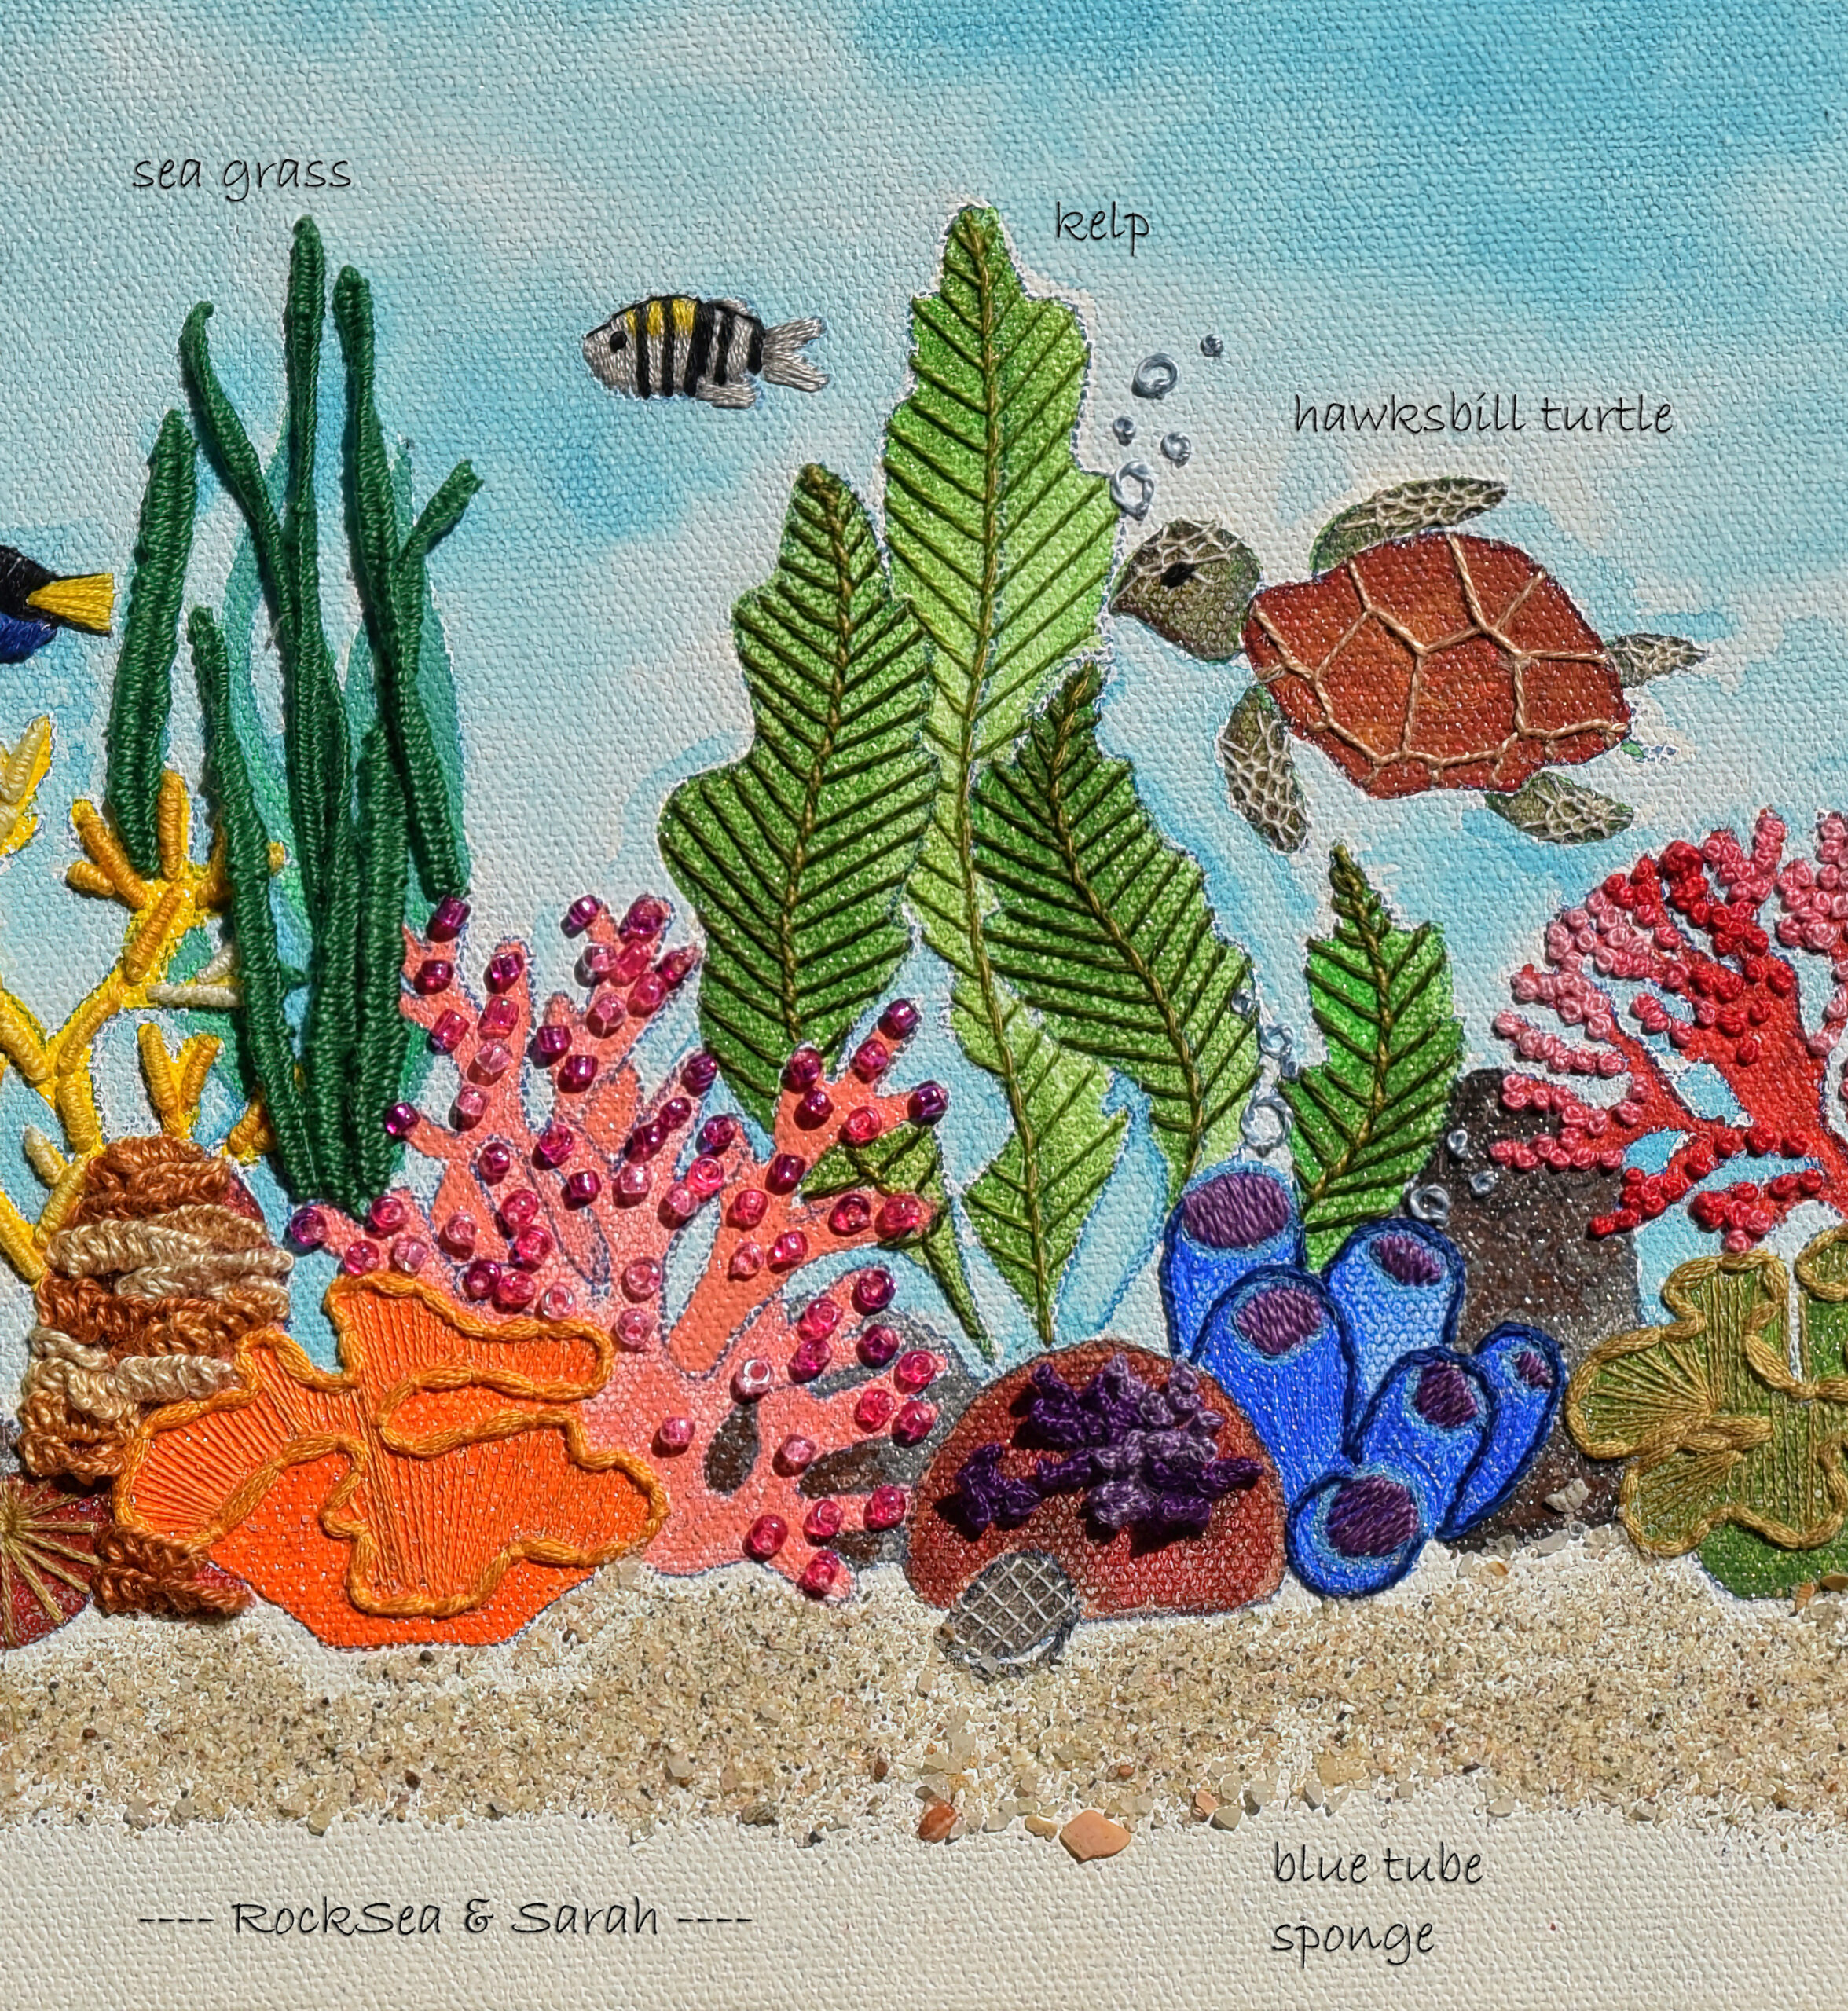 Hawksbill sea turtle, blue sea sponge, kelp, and sea grass, embroidered